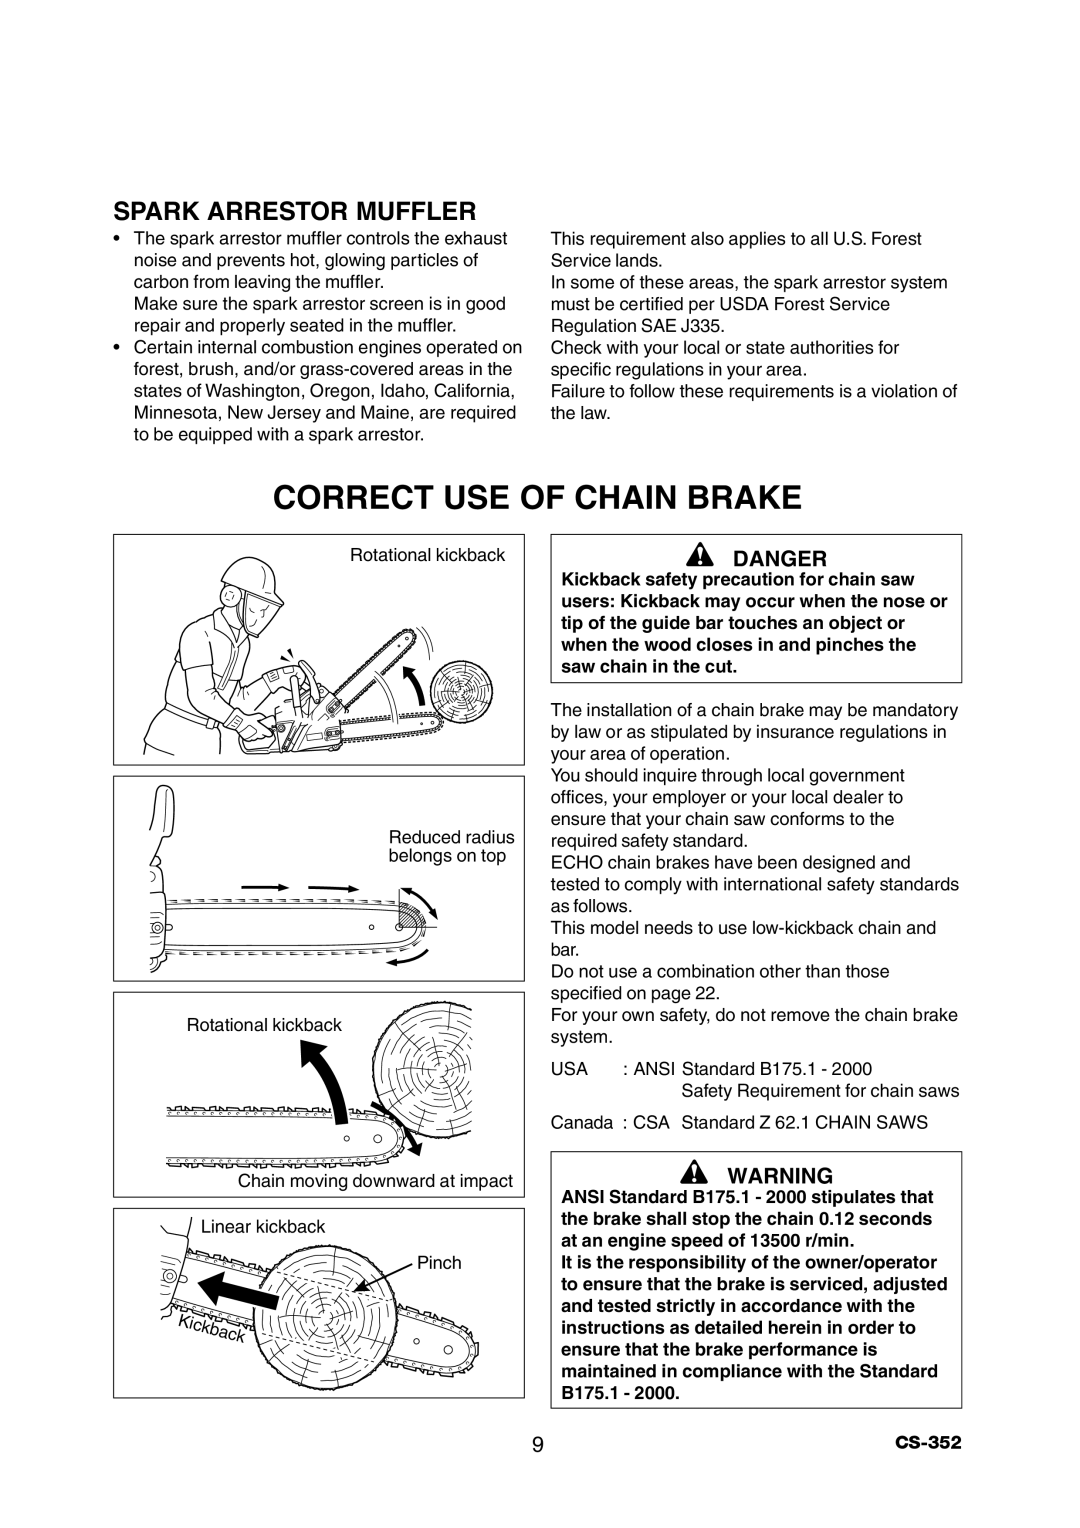 Echo CS-352 instruction manual Correct Use Of Chain Brake, Spark Arrestor Muffler, Danger 